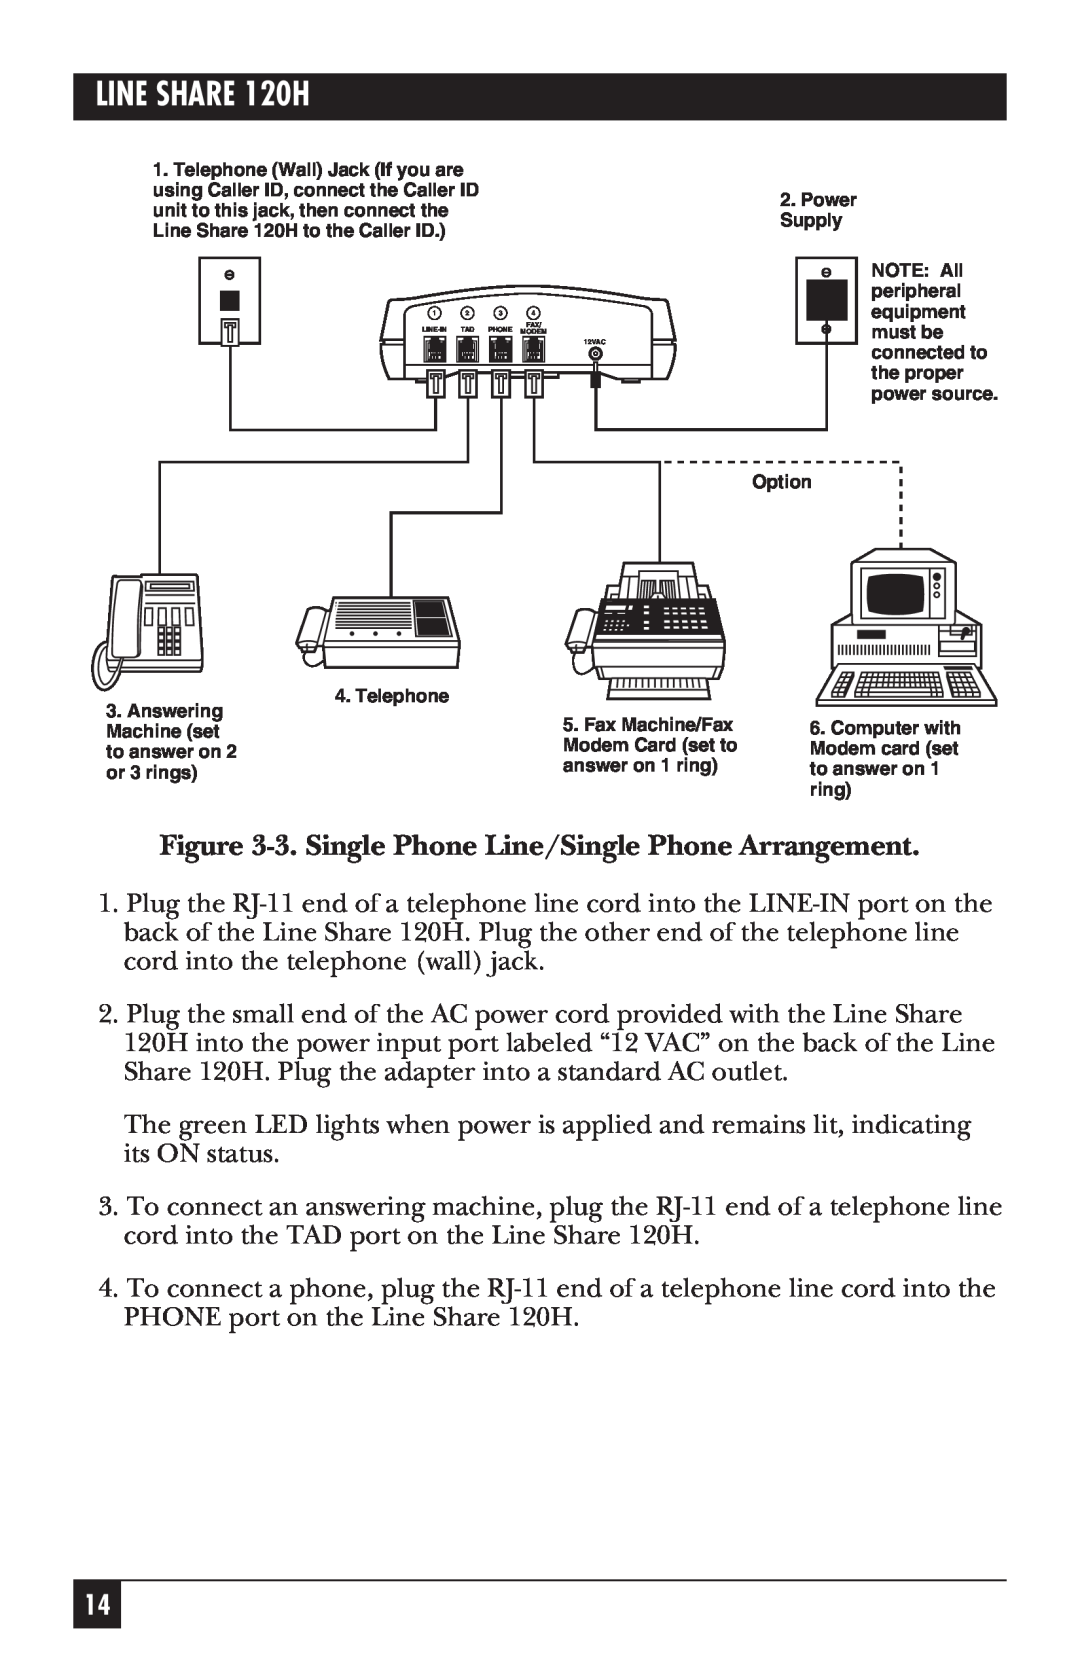 Black Box manual 3. Single Phone Line/Single Phone Arrangement, LINE SHARE 120H, Line-In, Phone Modem, 12VAC 